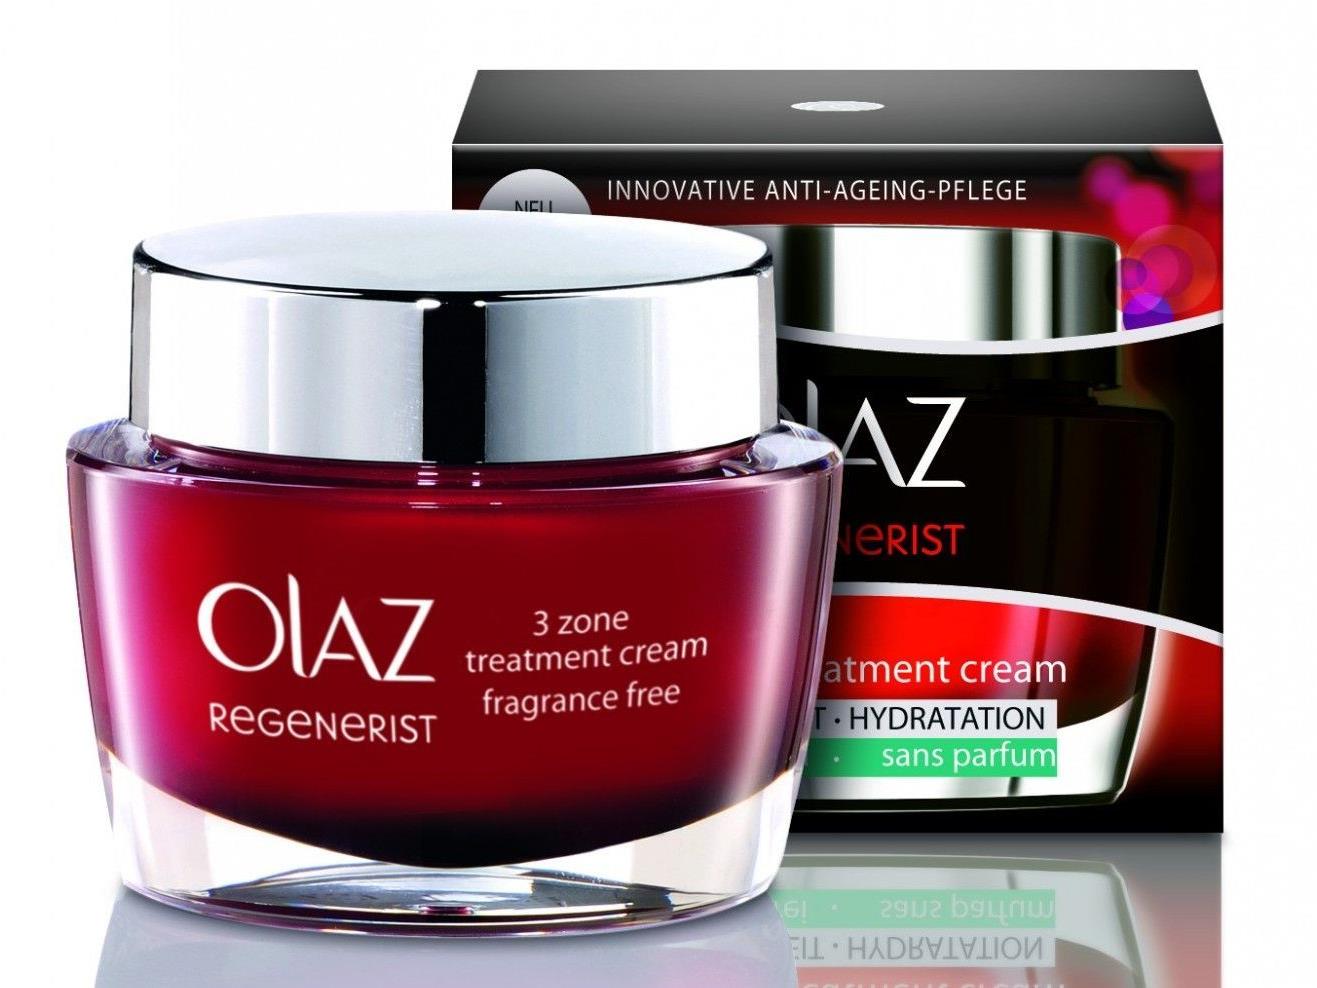 Wir verlosen 3 Stück Olaz Regenerist 3 Zone Treatment Cream parfumfrei.